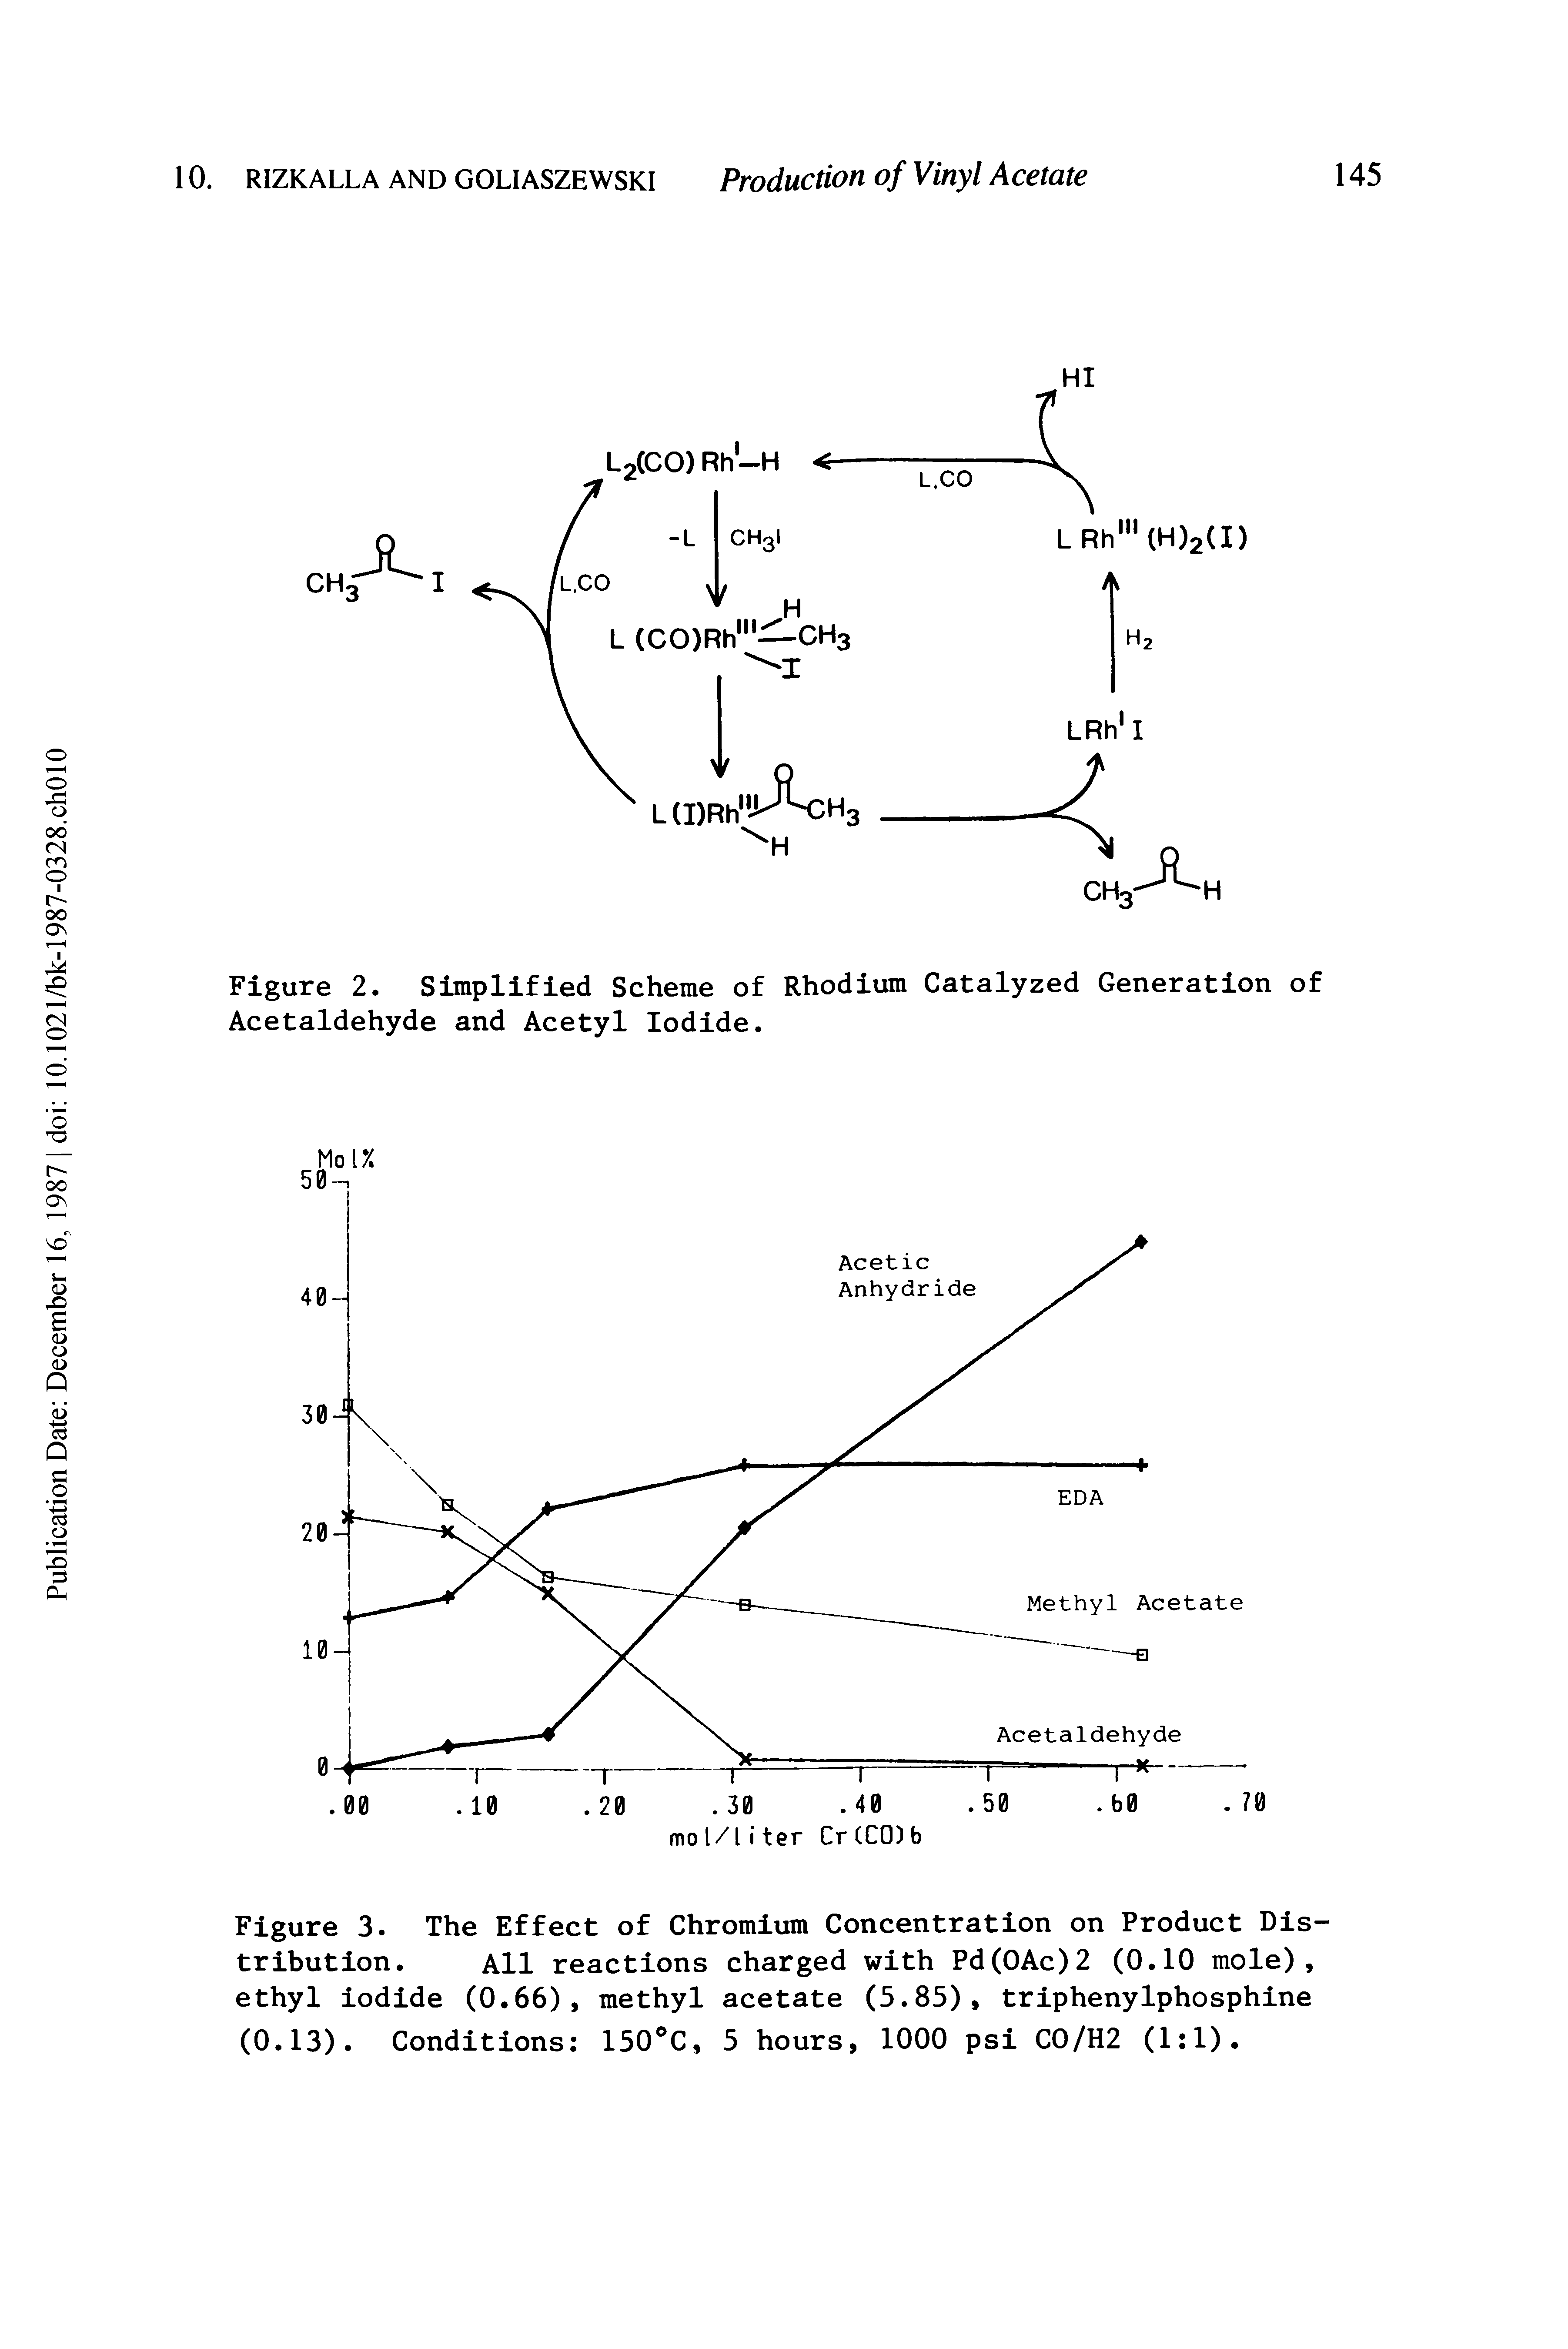 Figure 2. Simplified Scheme of Rhodium Catalyzed Generation of Acetaldehyde and Acetyl Iodide.